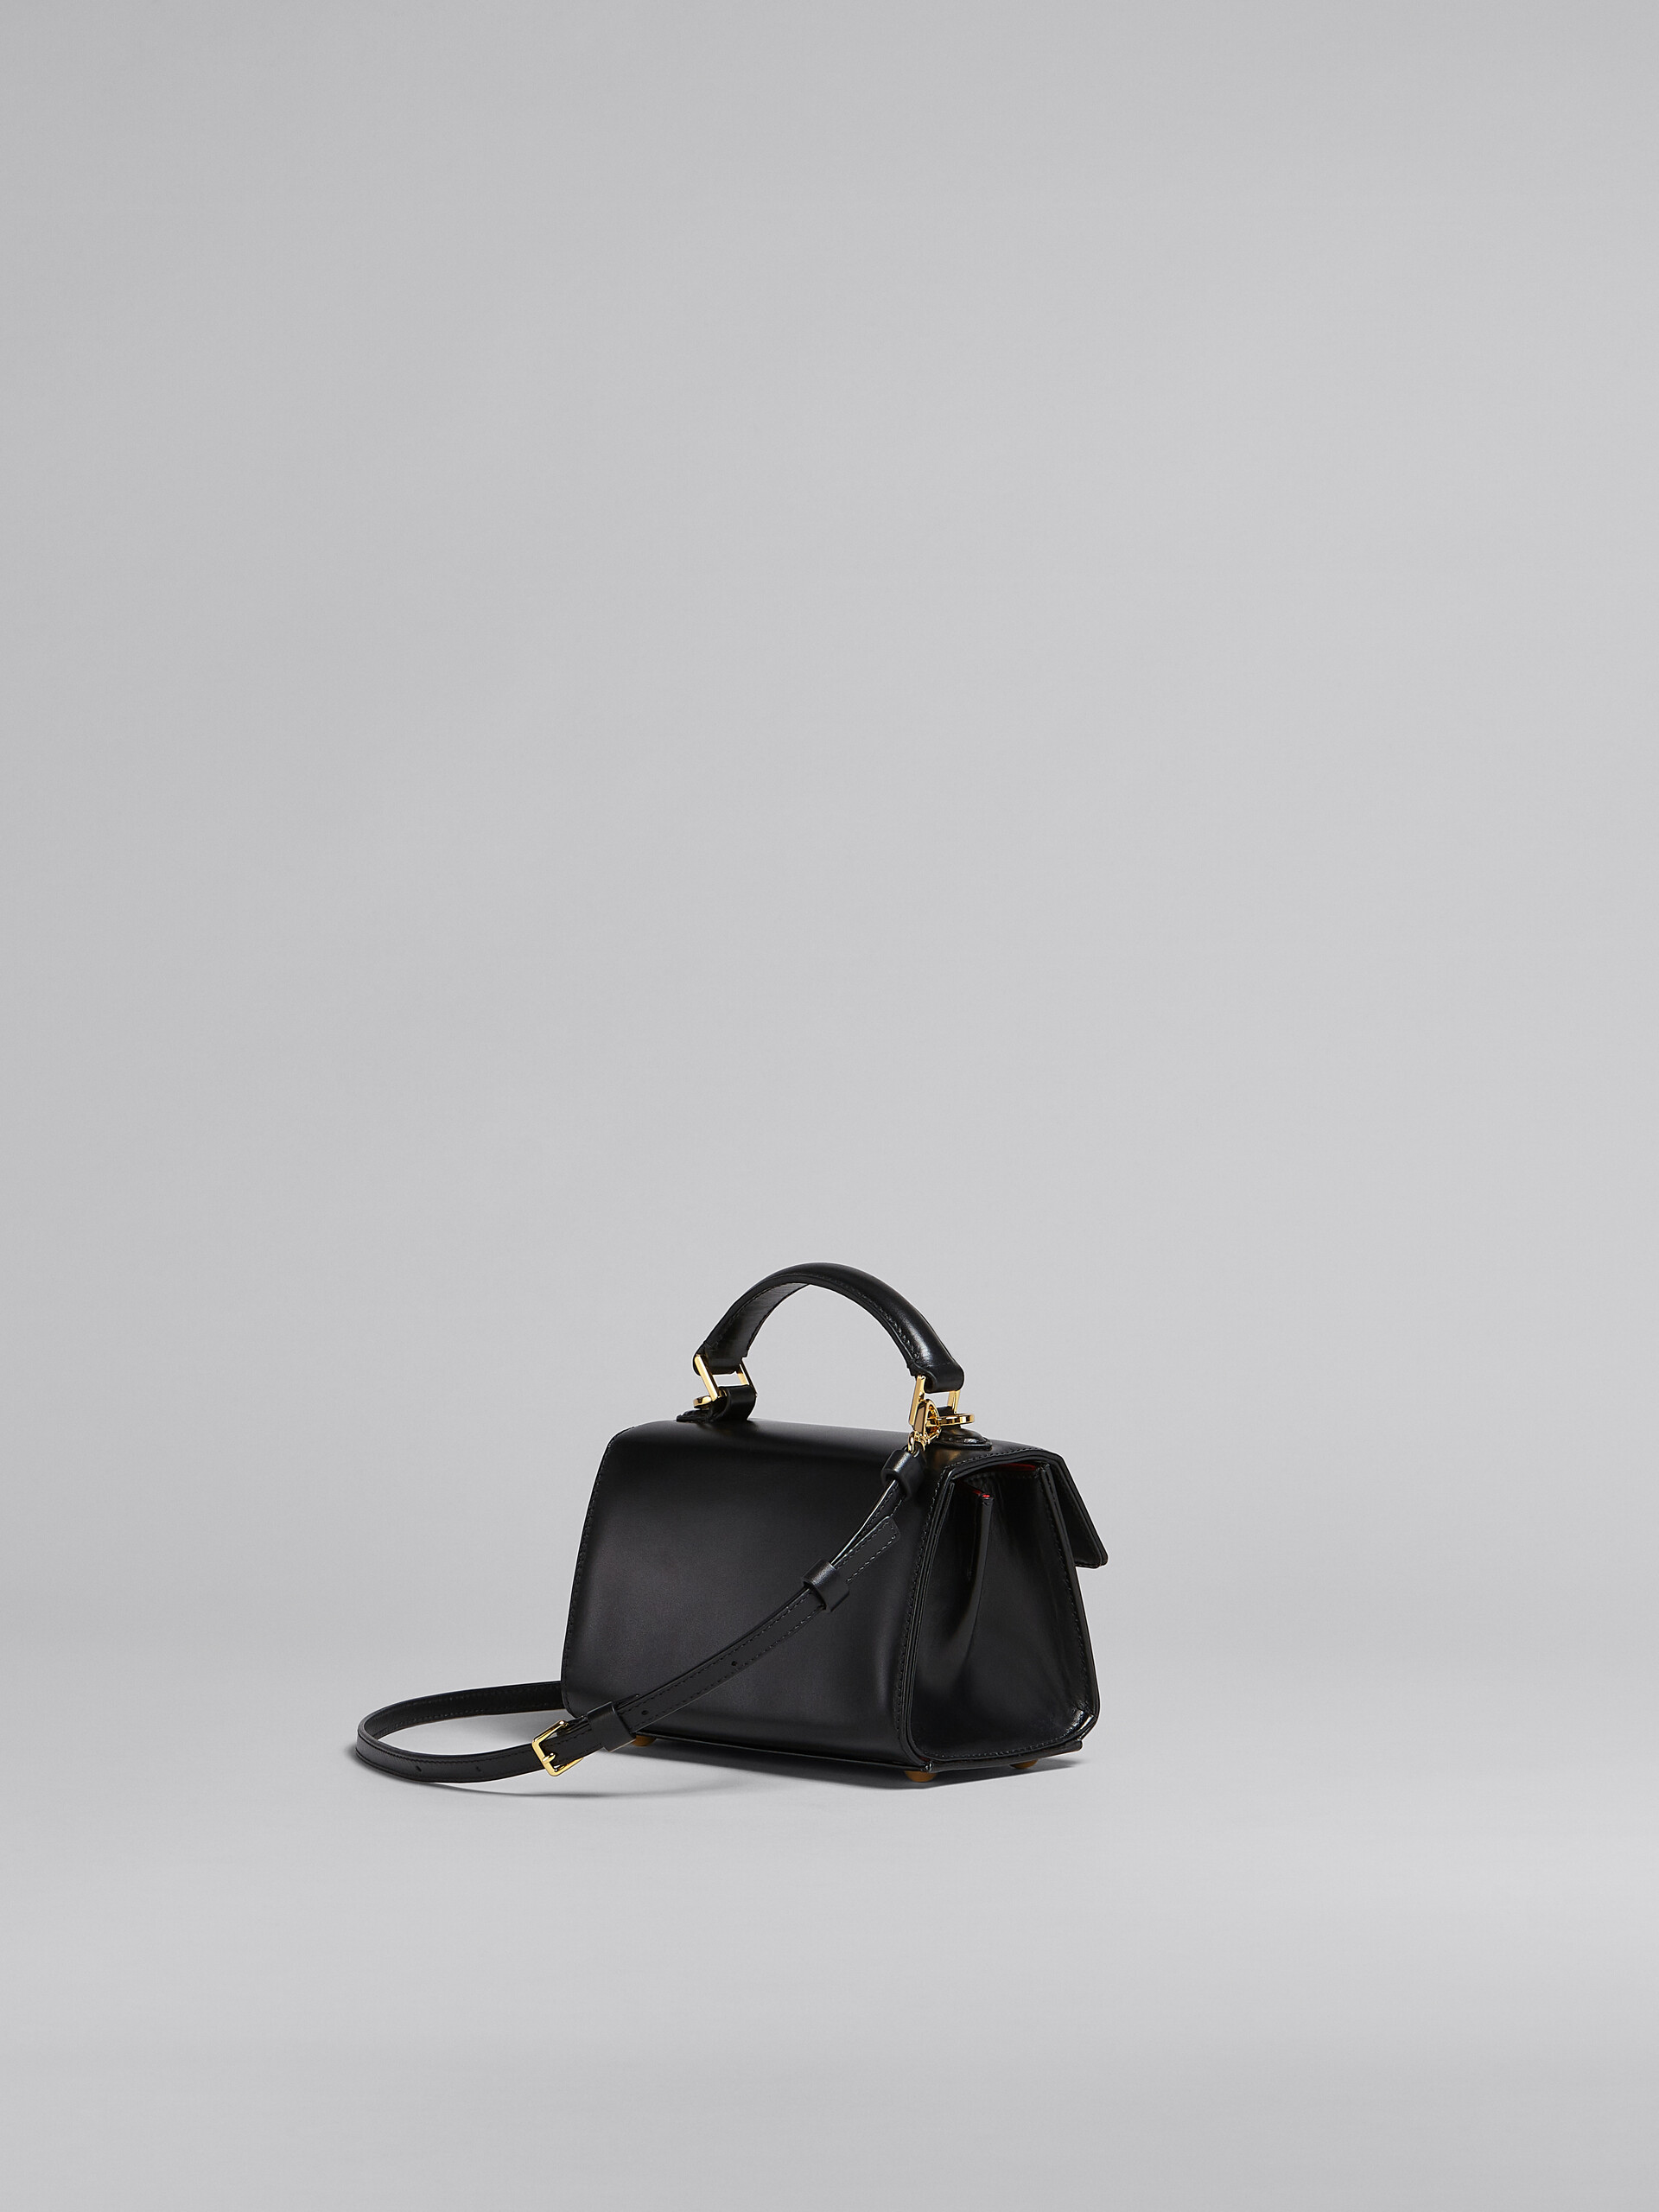 Relativity Mini Bag in black leather - Handbags - Image 3